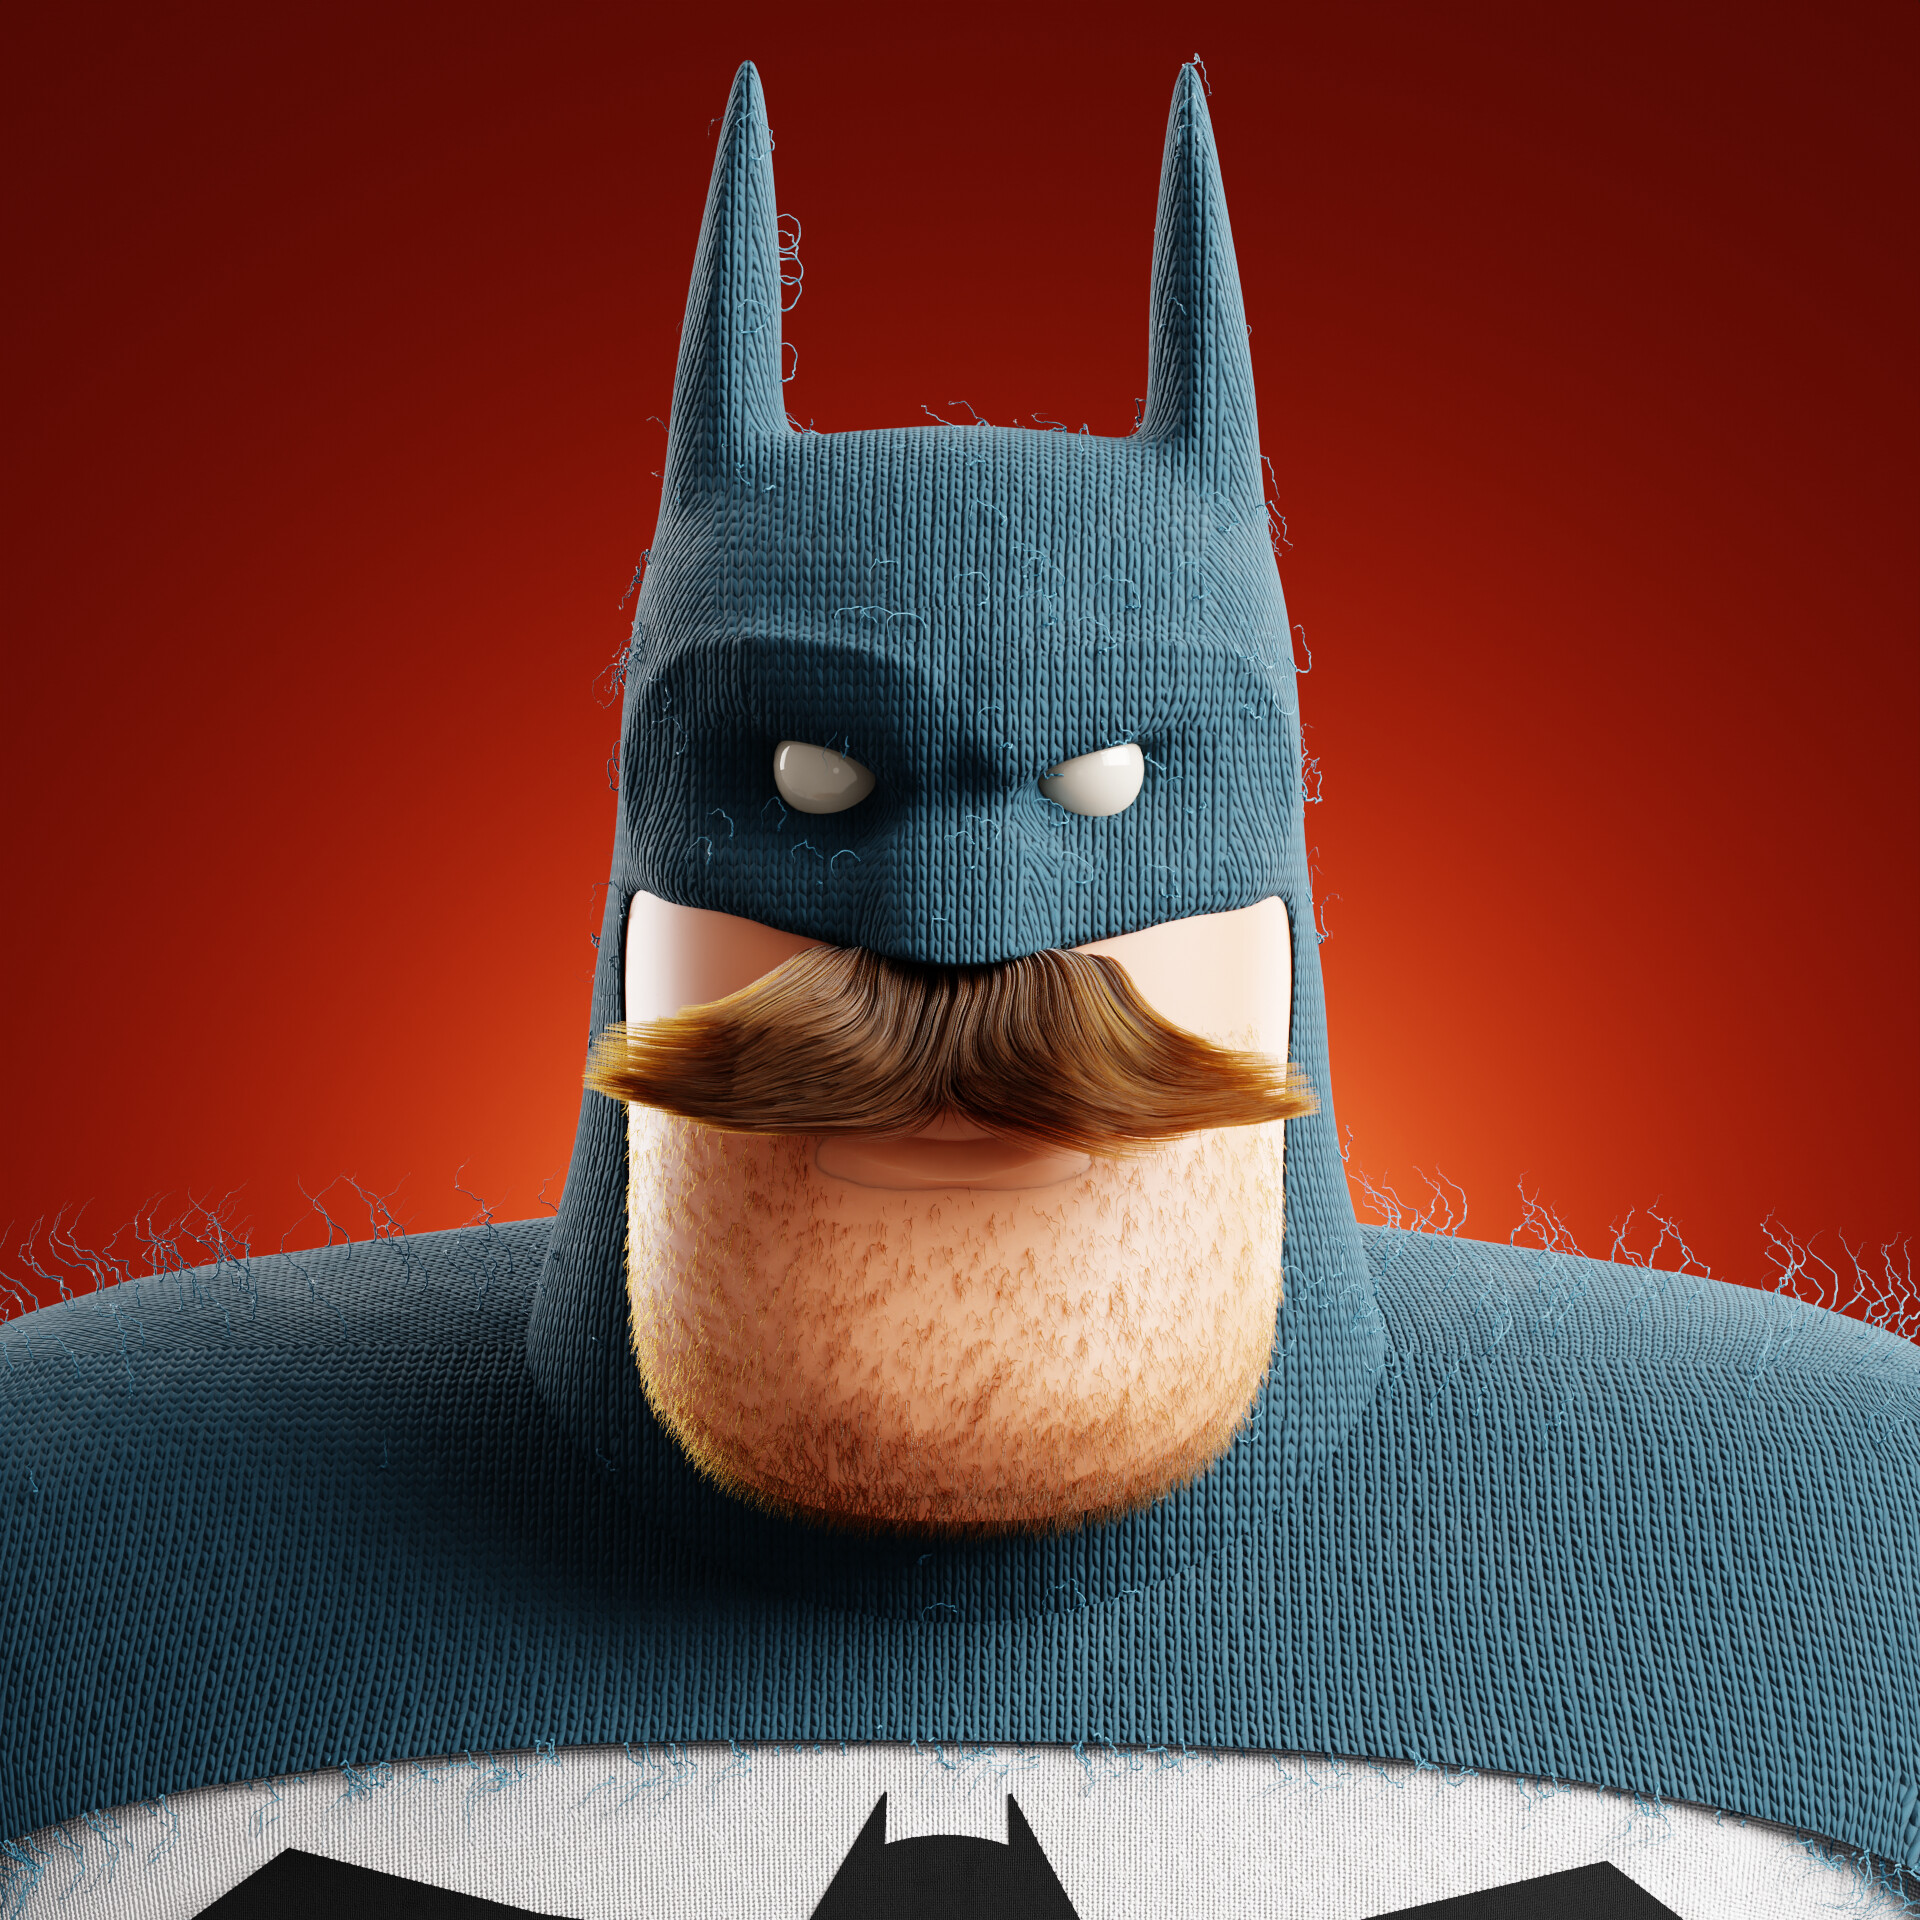 batman with a mustache